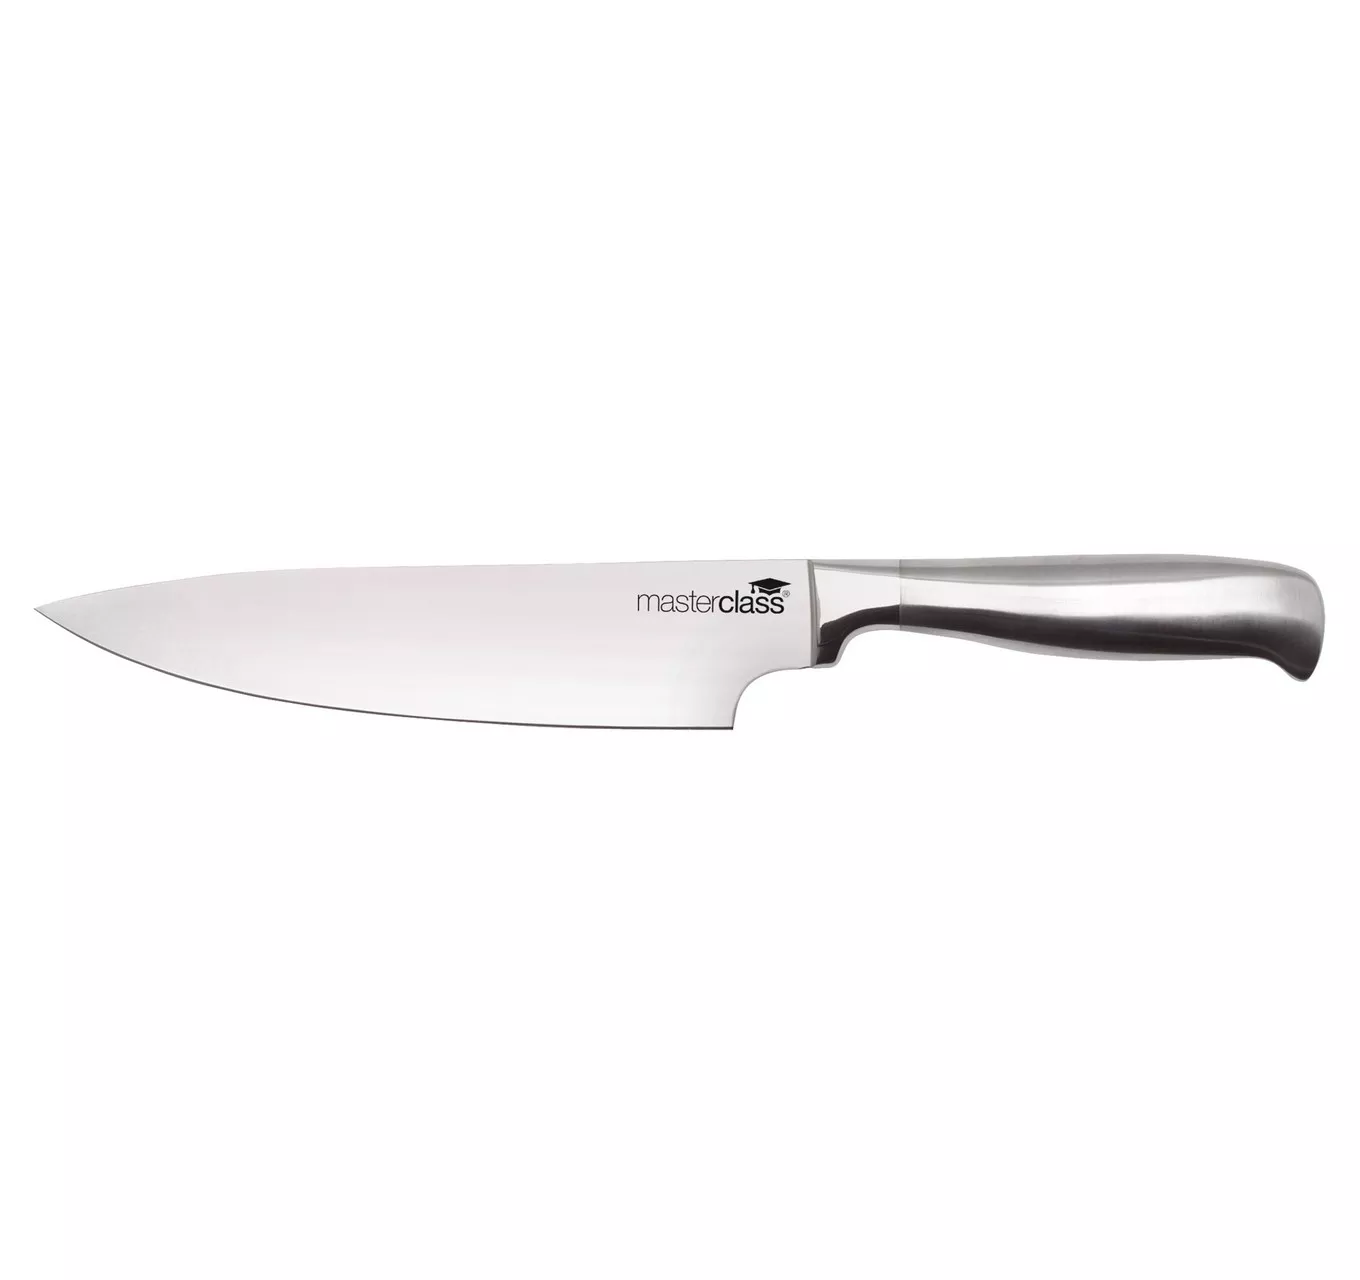 Deluxe Chefs Knife 20cm